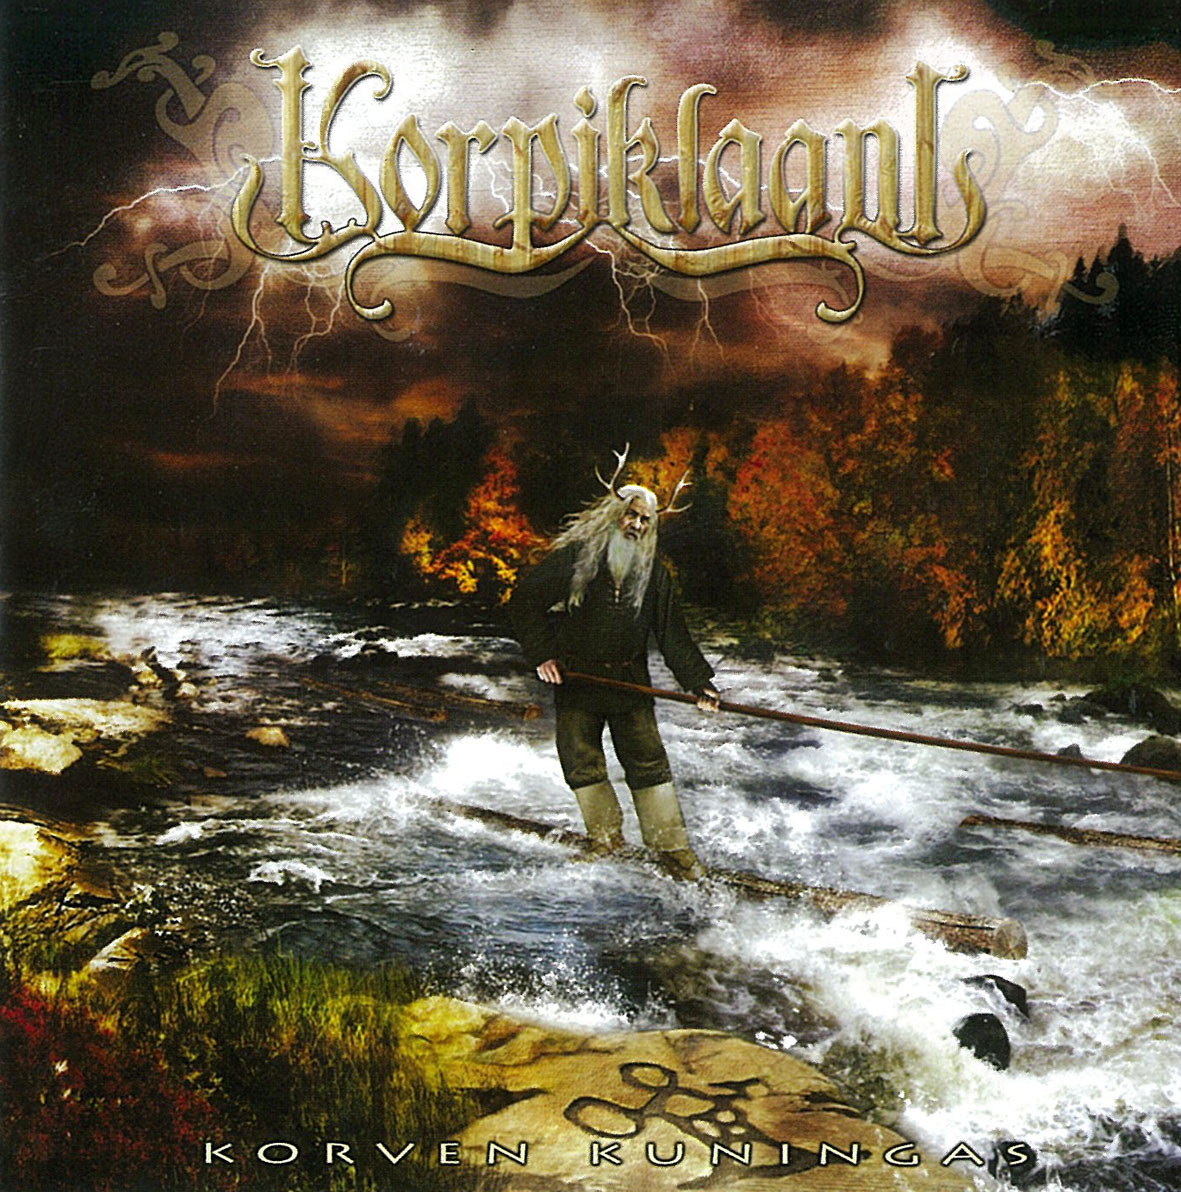 Metal Downloads: Korpiklaani Discography/discografia